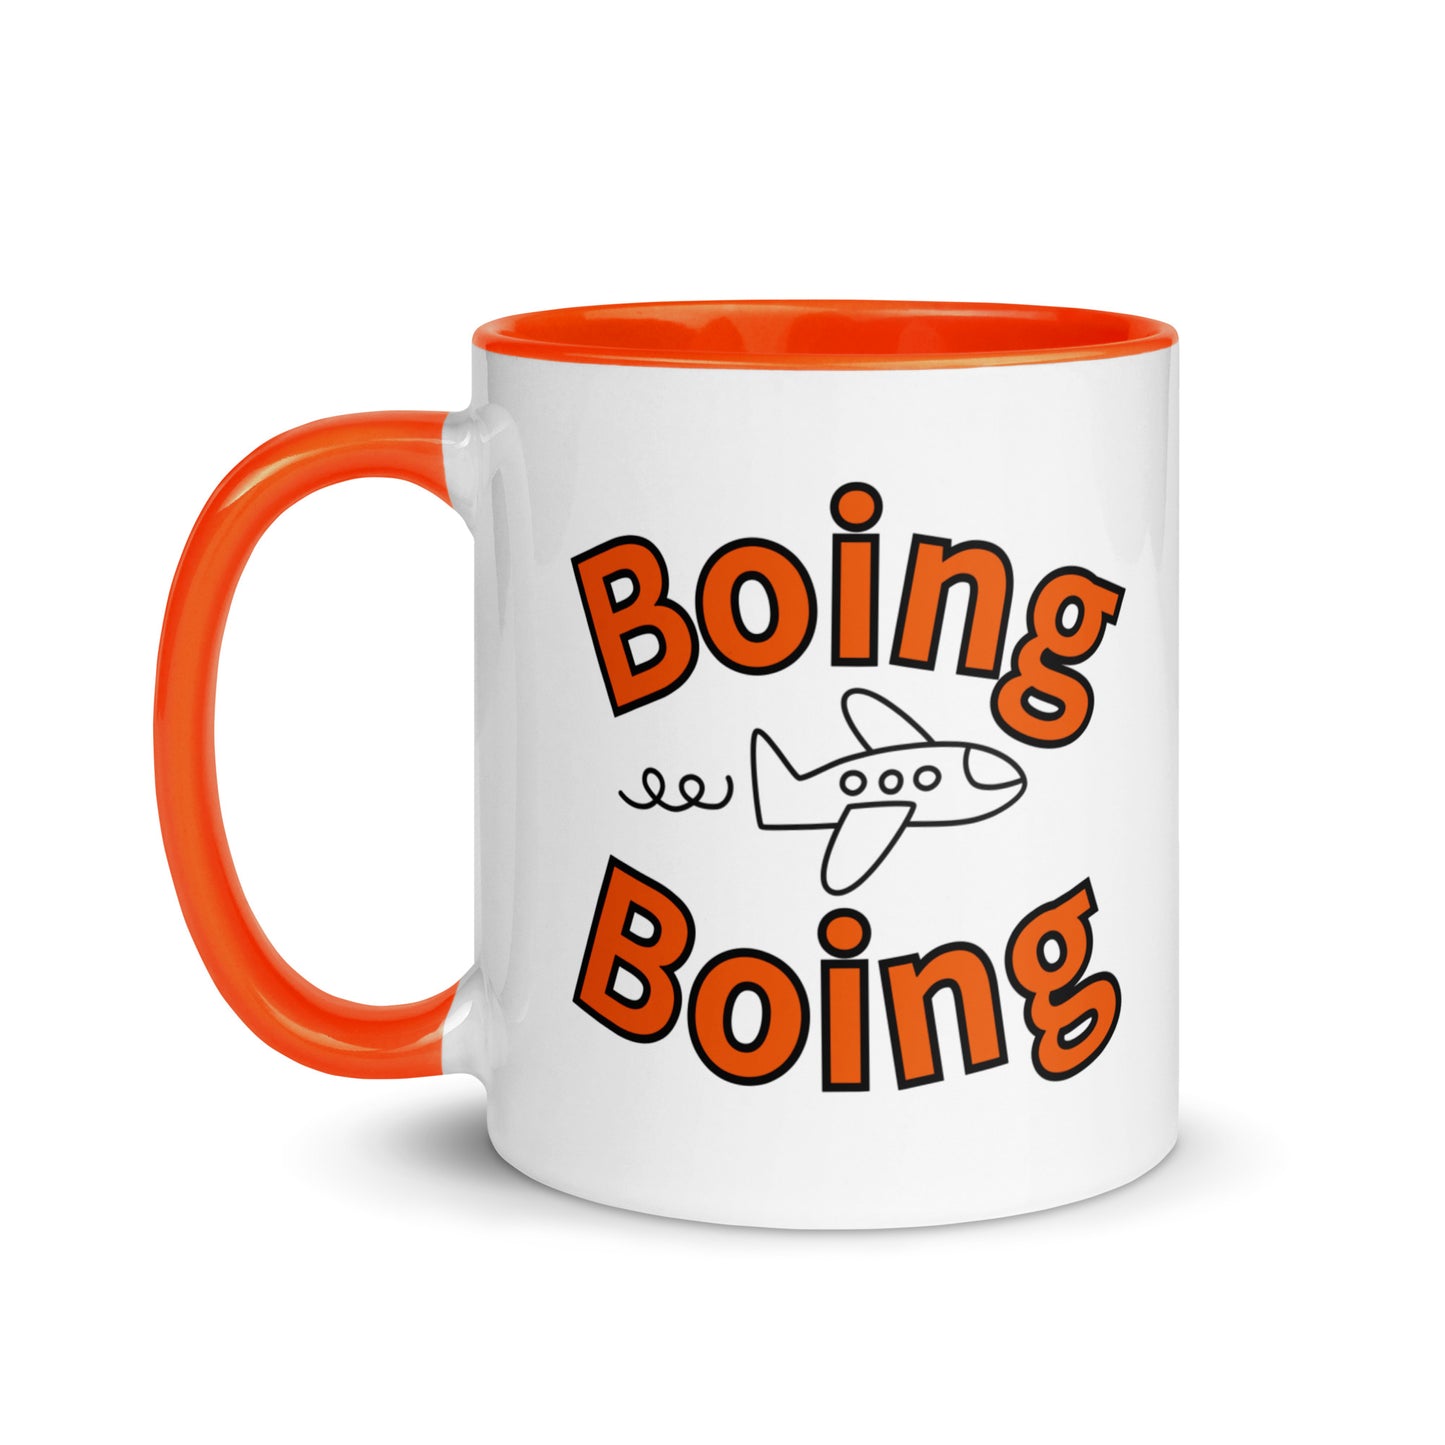 Boing Boing Mug with Color Inside